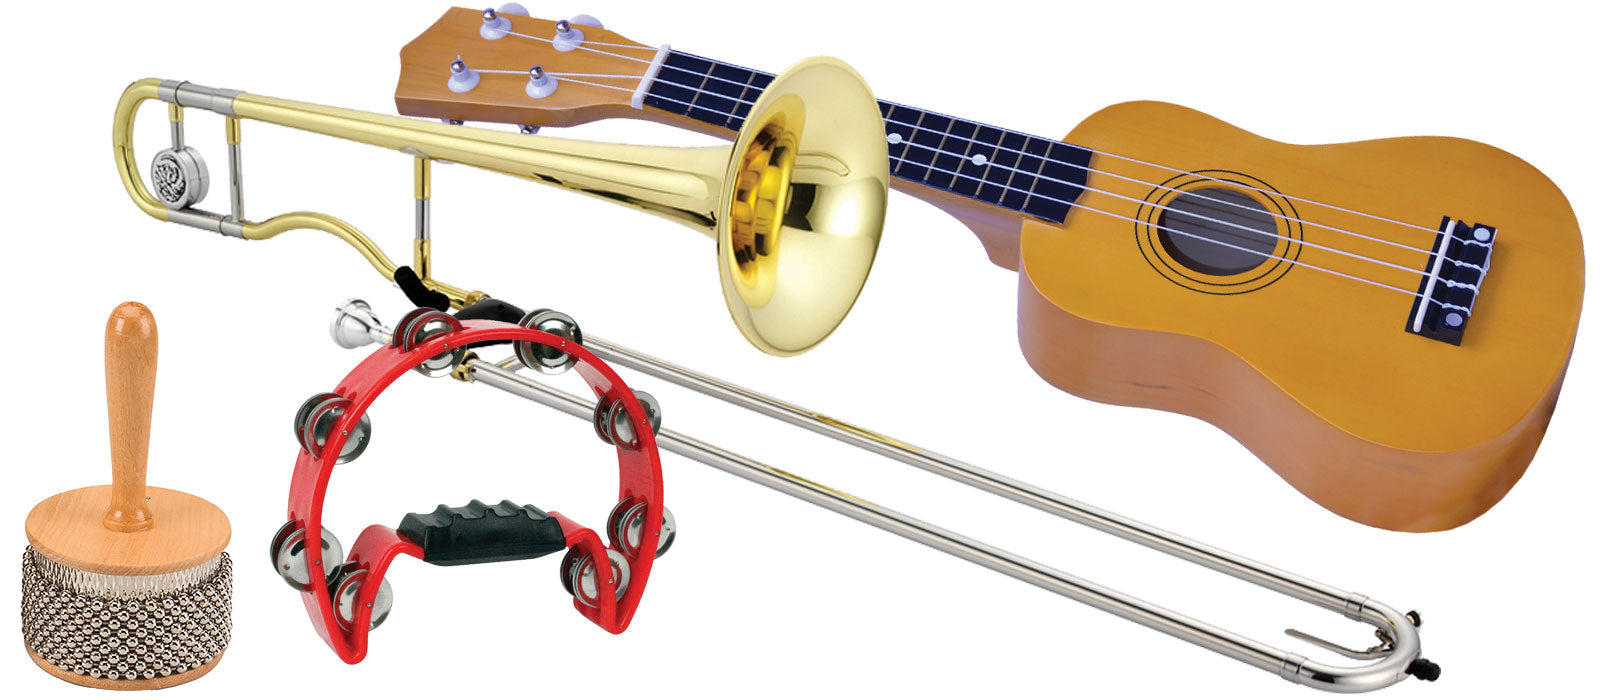 School Musical Instruments